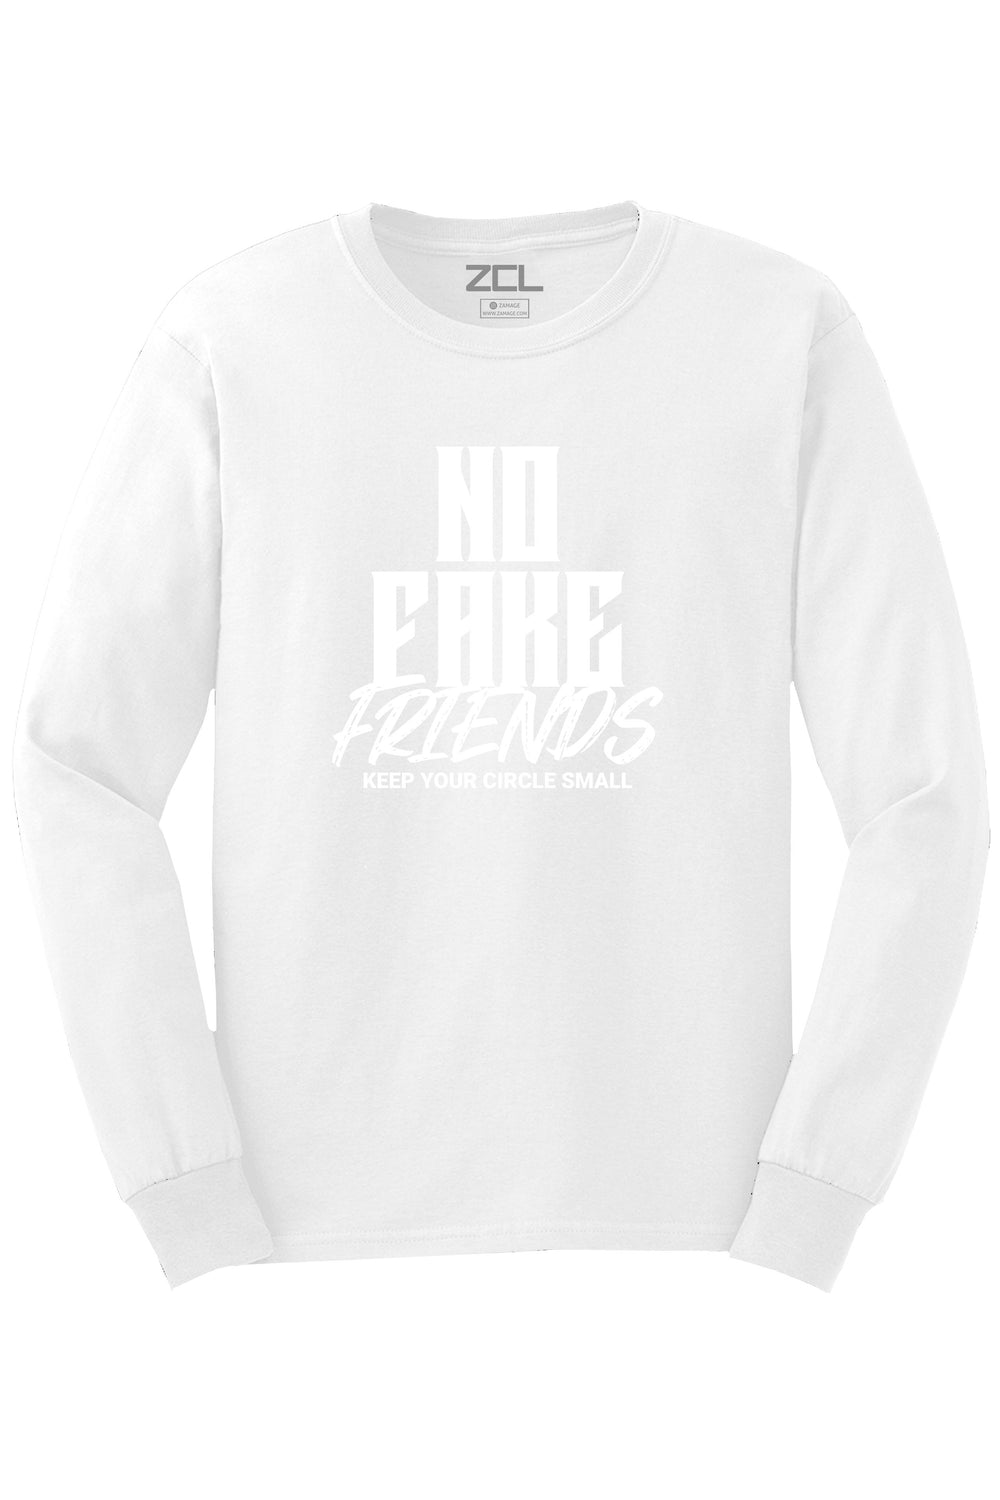 No Fake Friends Long Sleeve Tee (White Logo) - Zamage